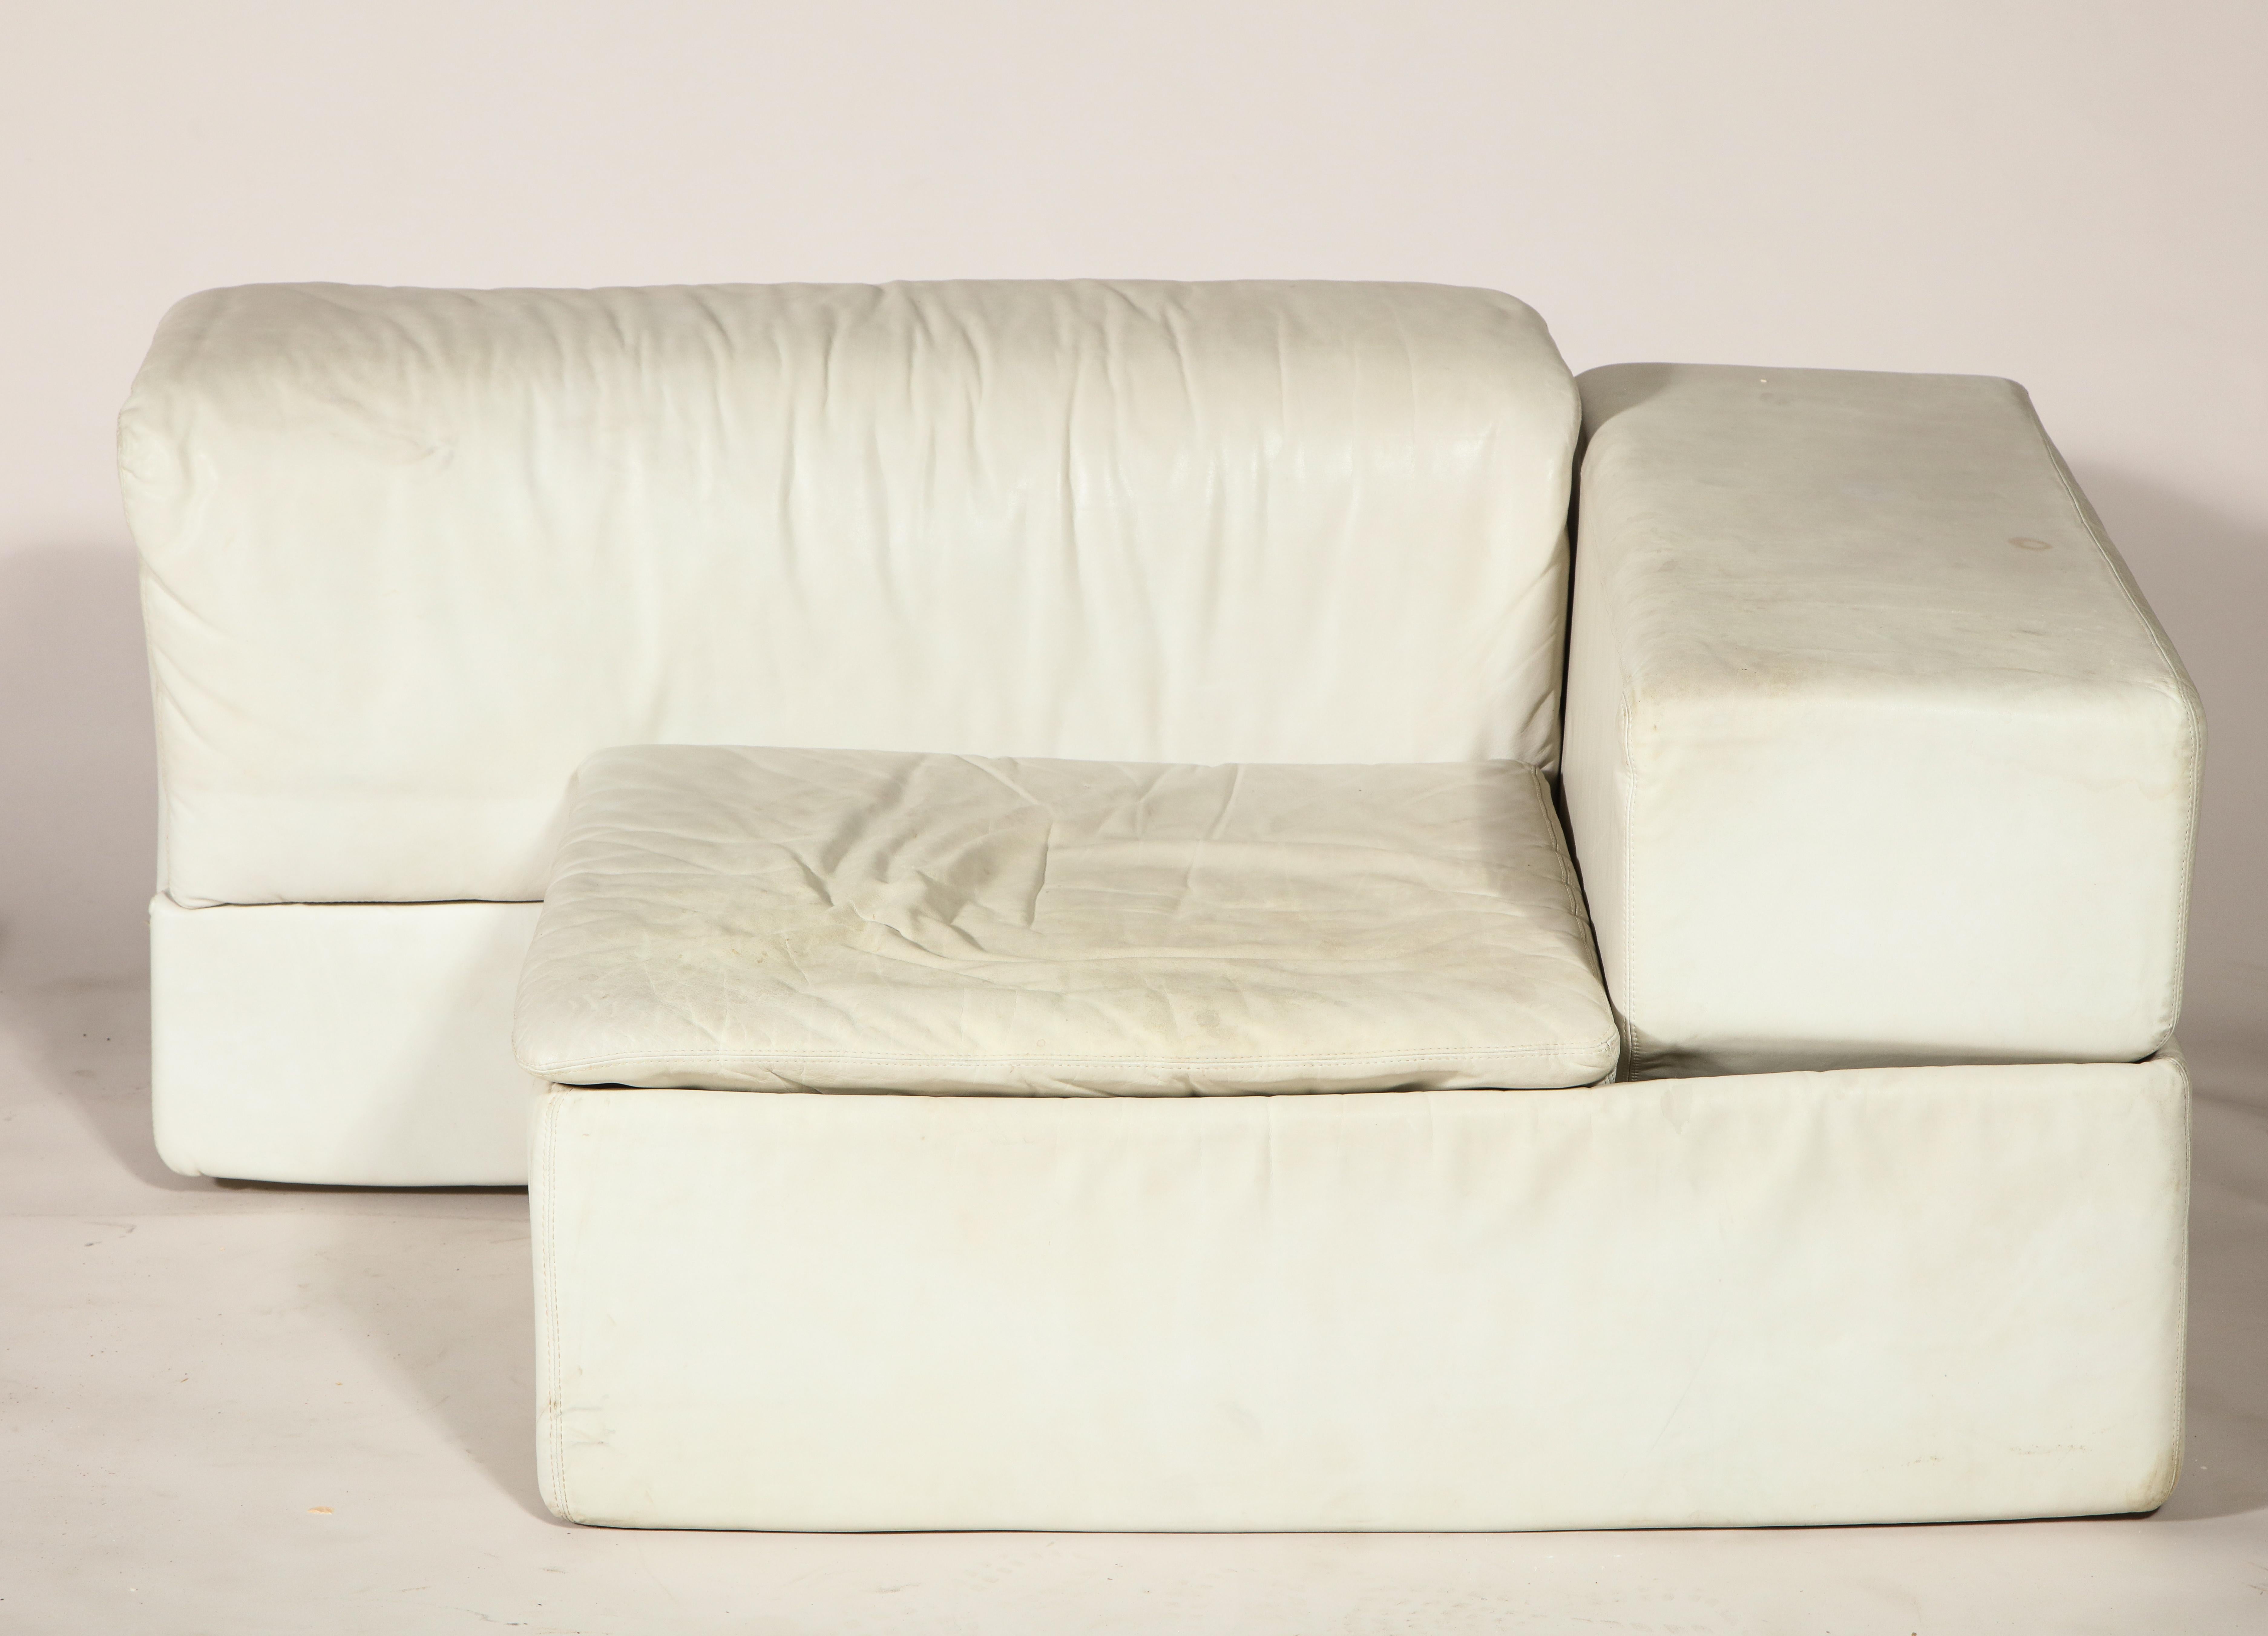 Italian Sormani, Claudio Salocchi Palone White Leather Sectional Sofa, Italy, 1970s